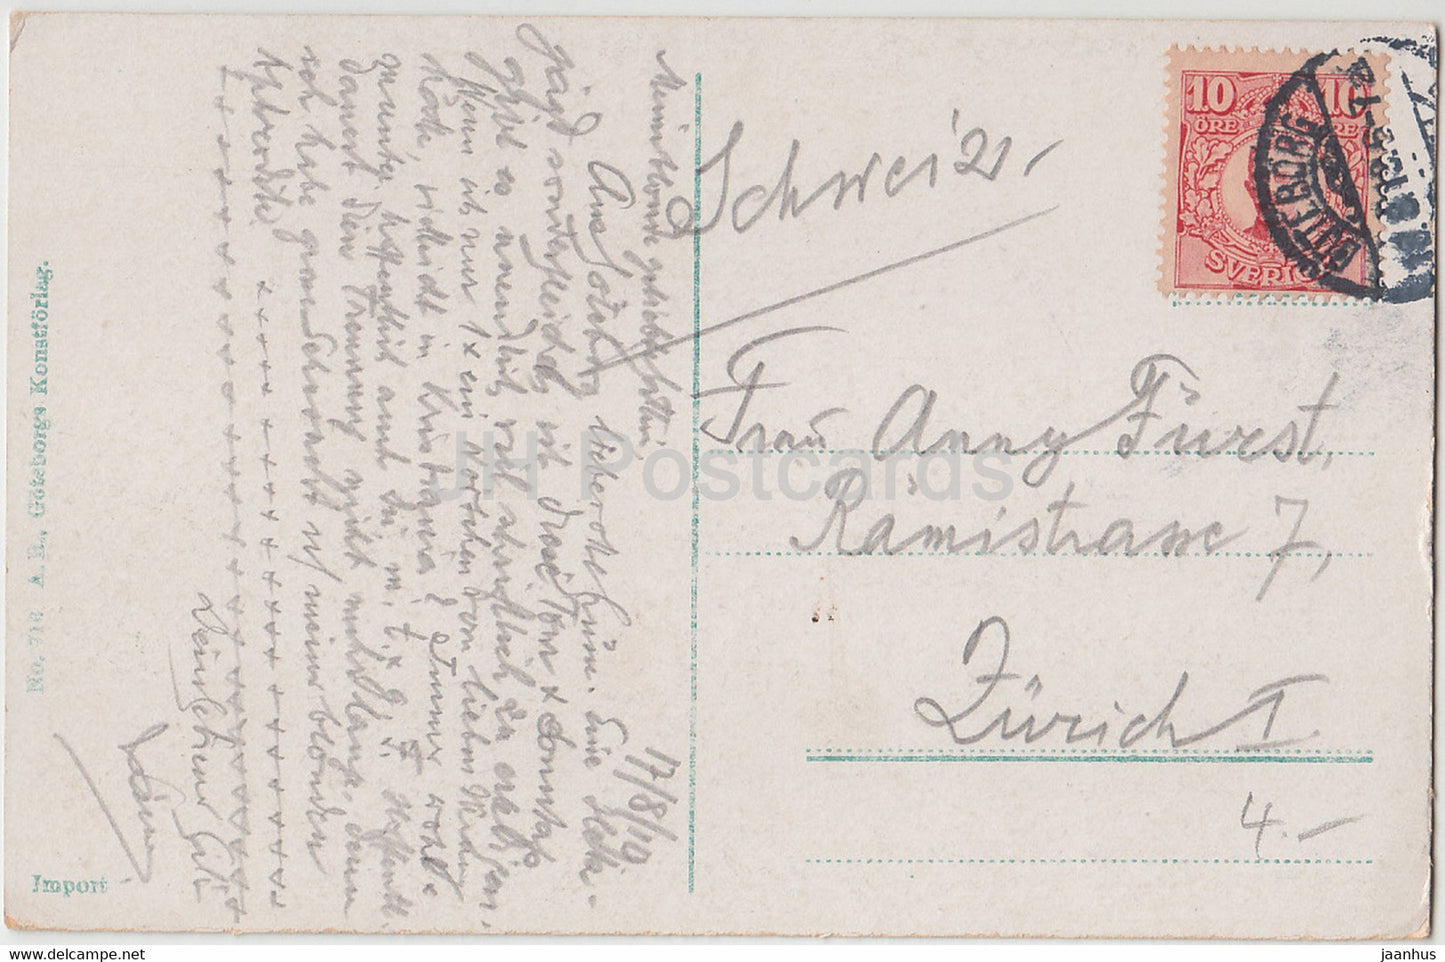 Trolleholm - Skane - carte postale ancienne - 1910 - Suède - utilisé